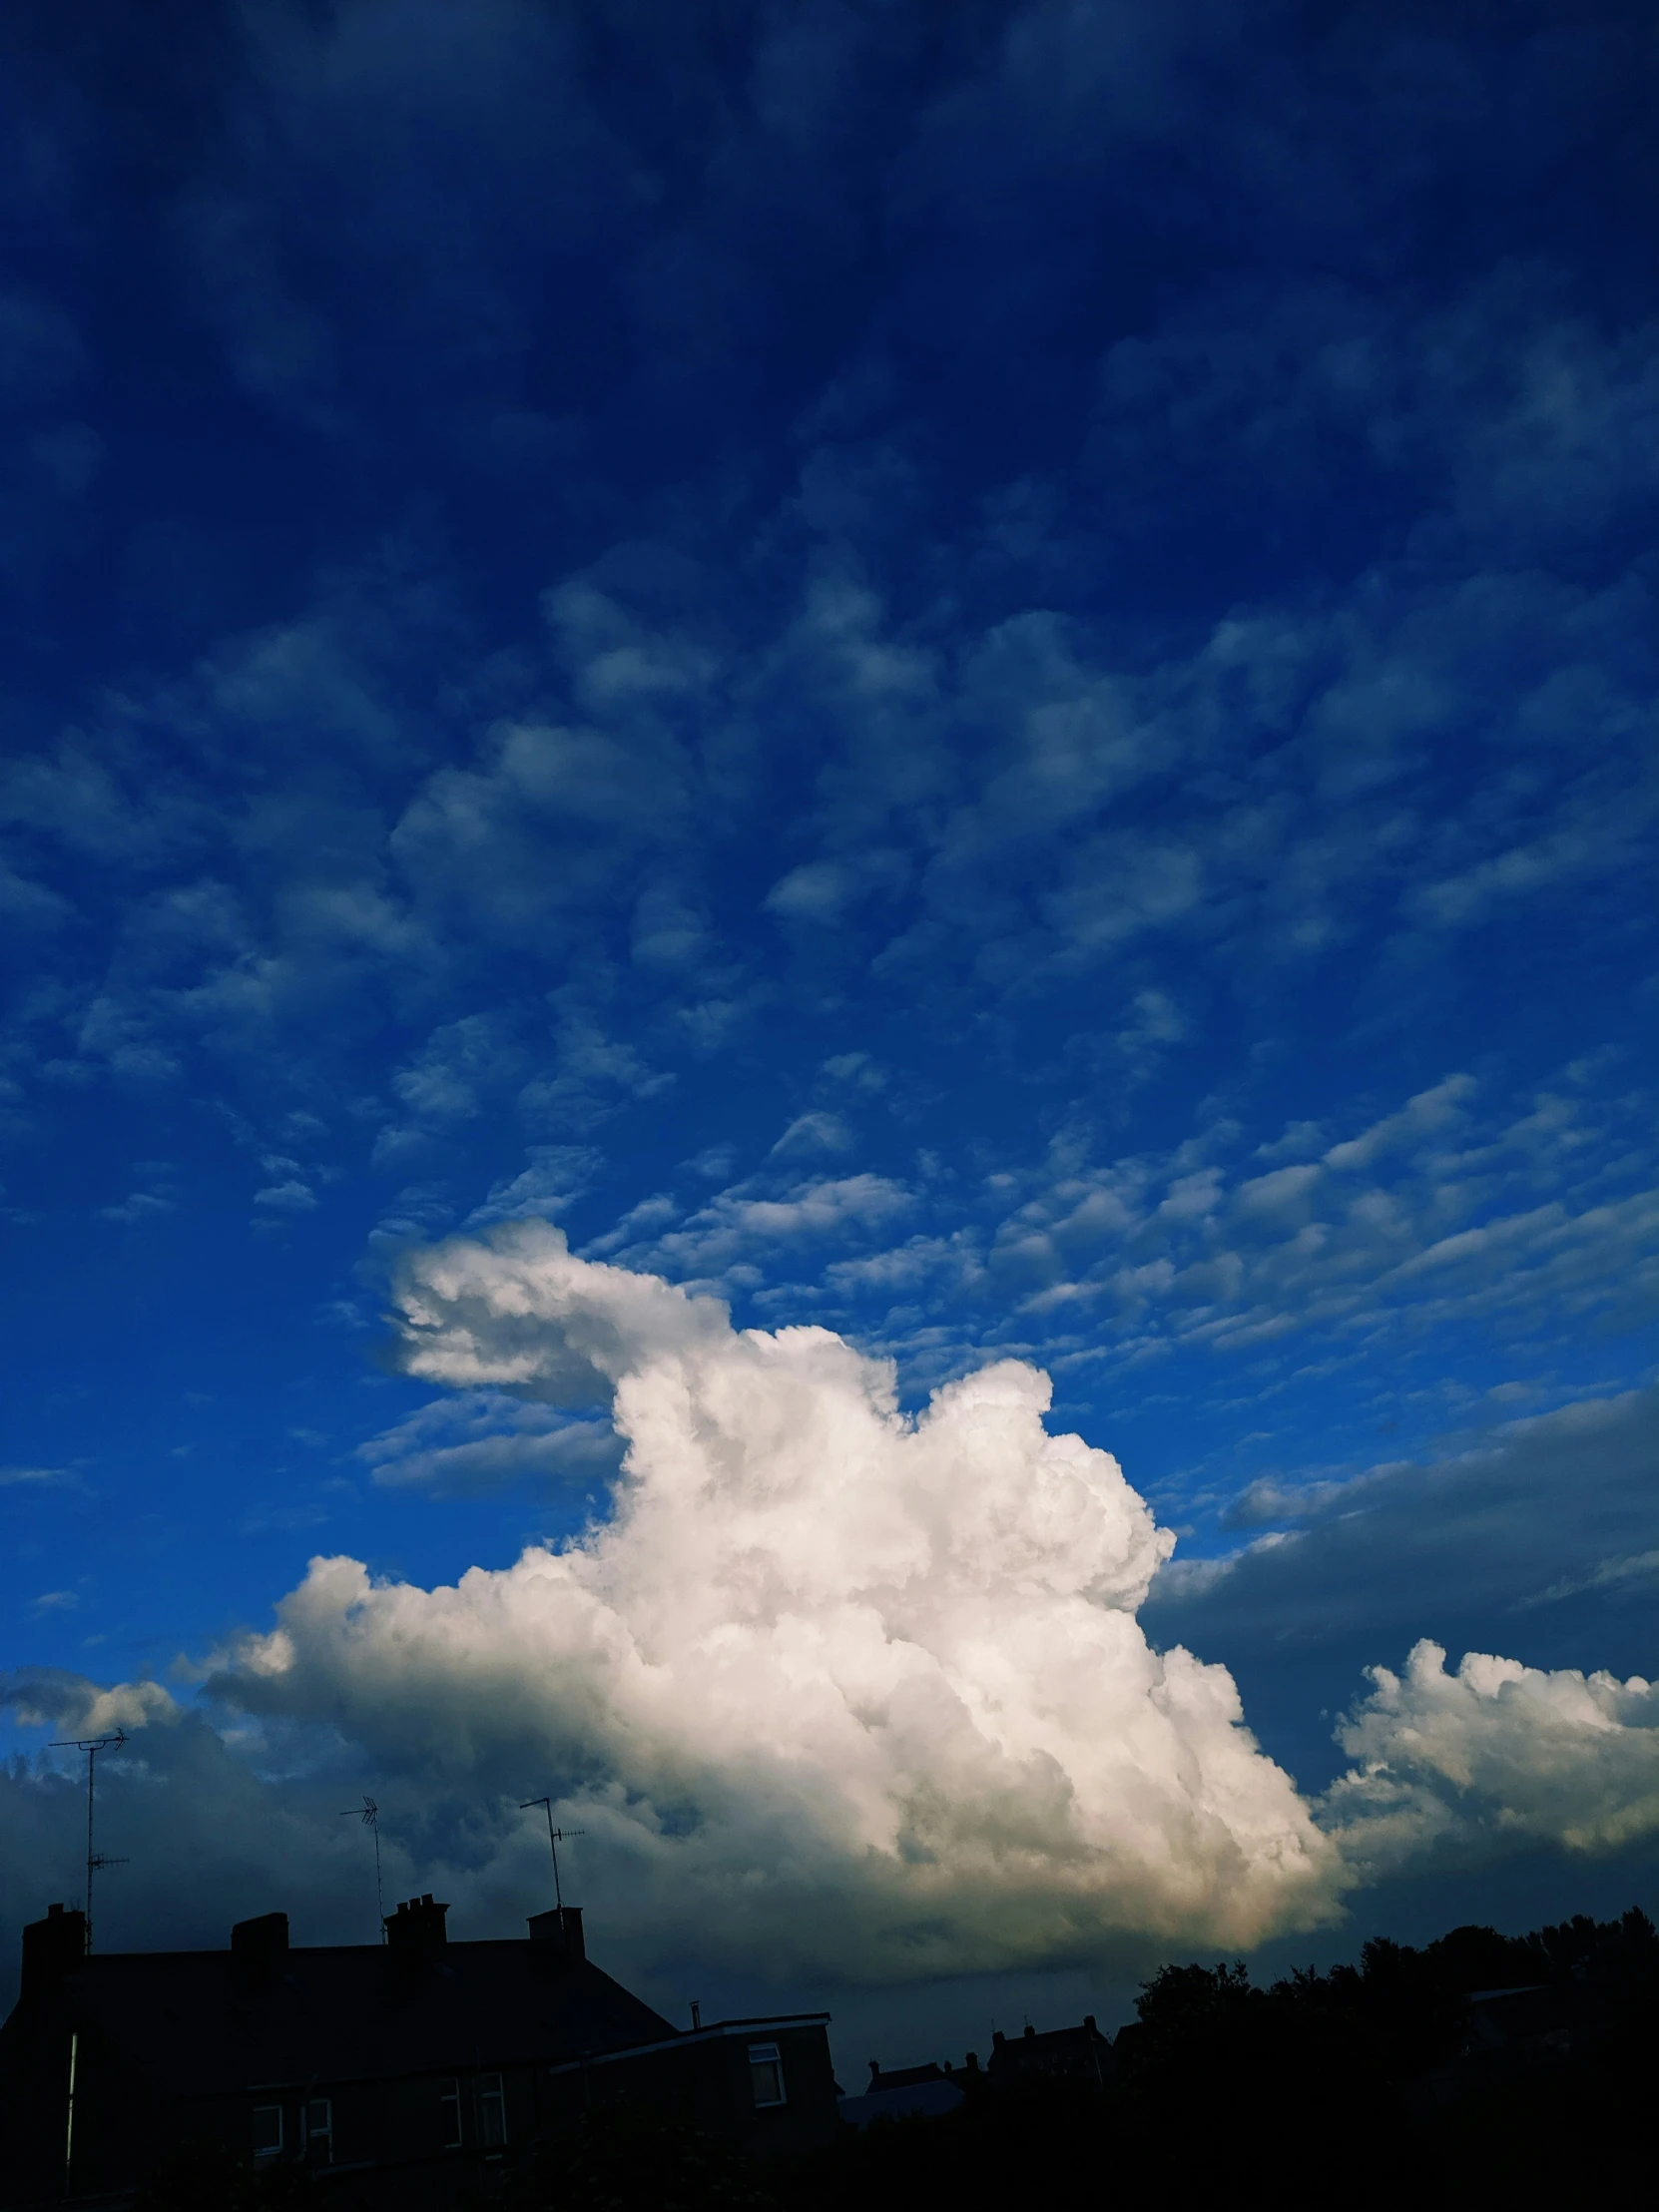 a cloud is seen on a clear blue sky